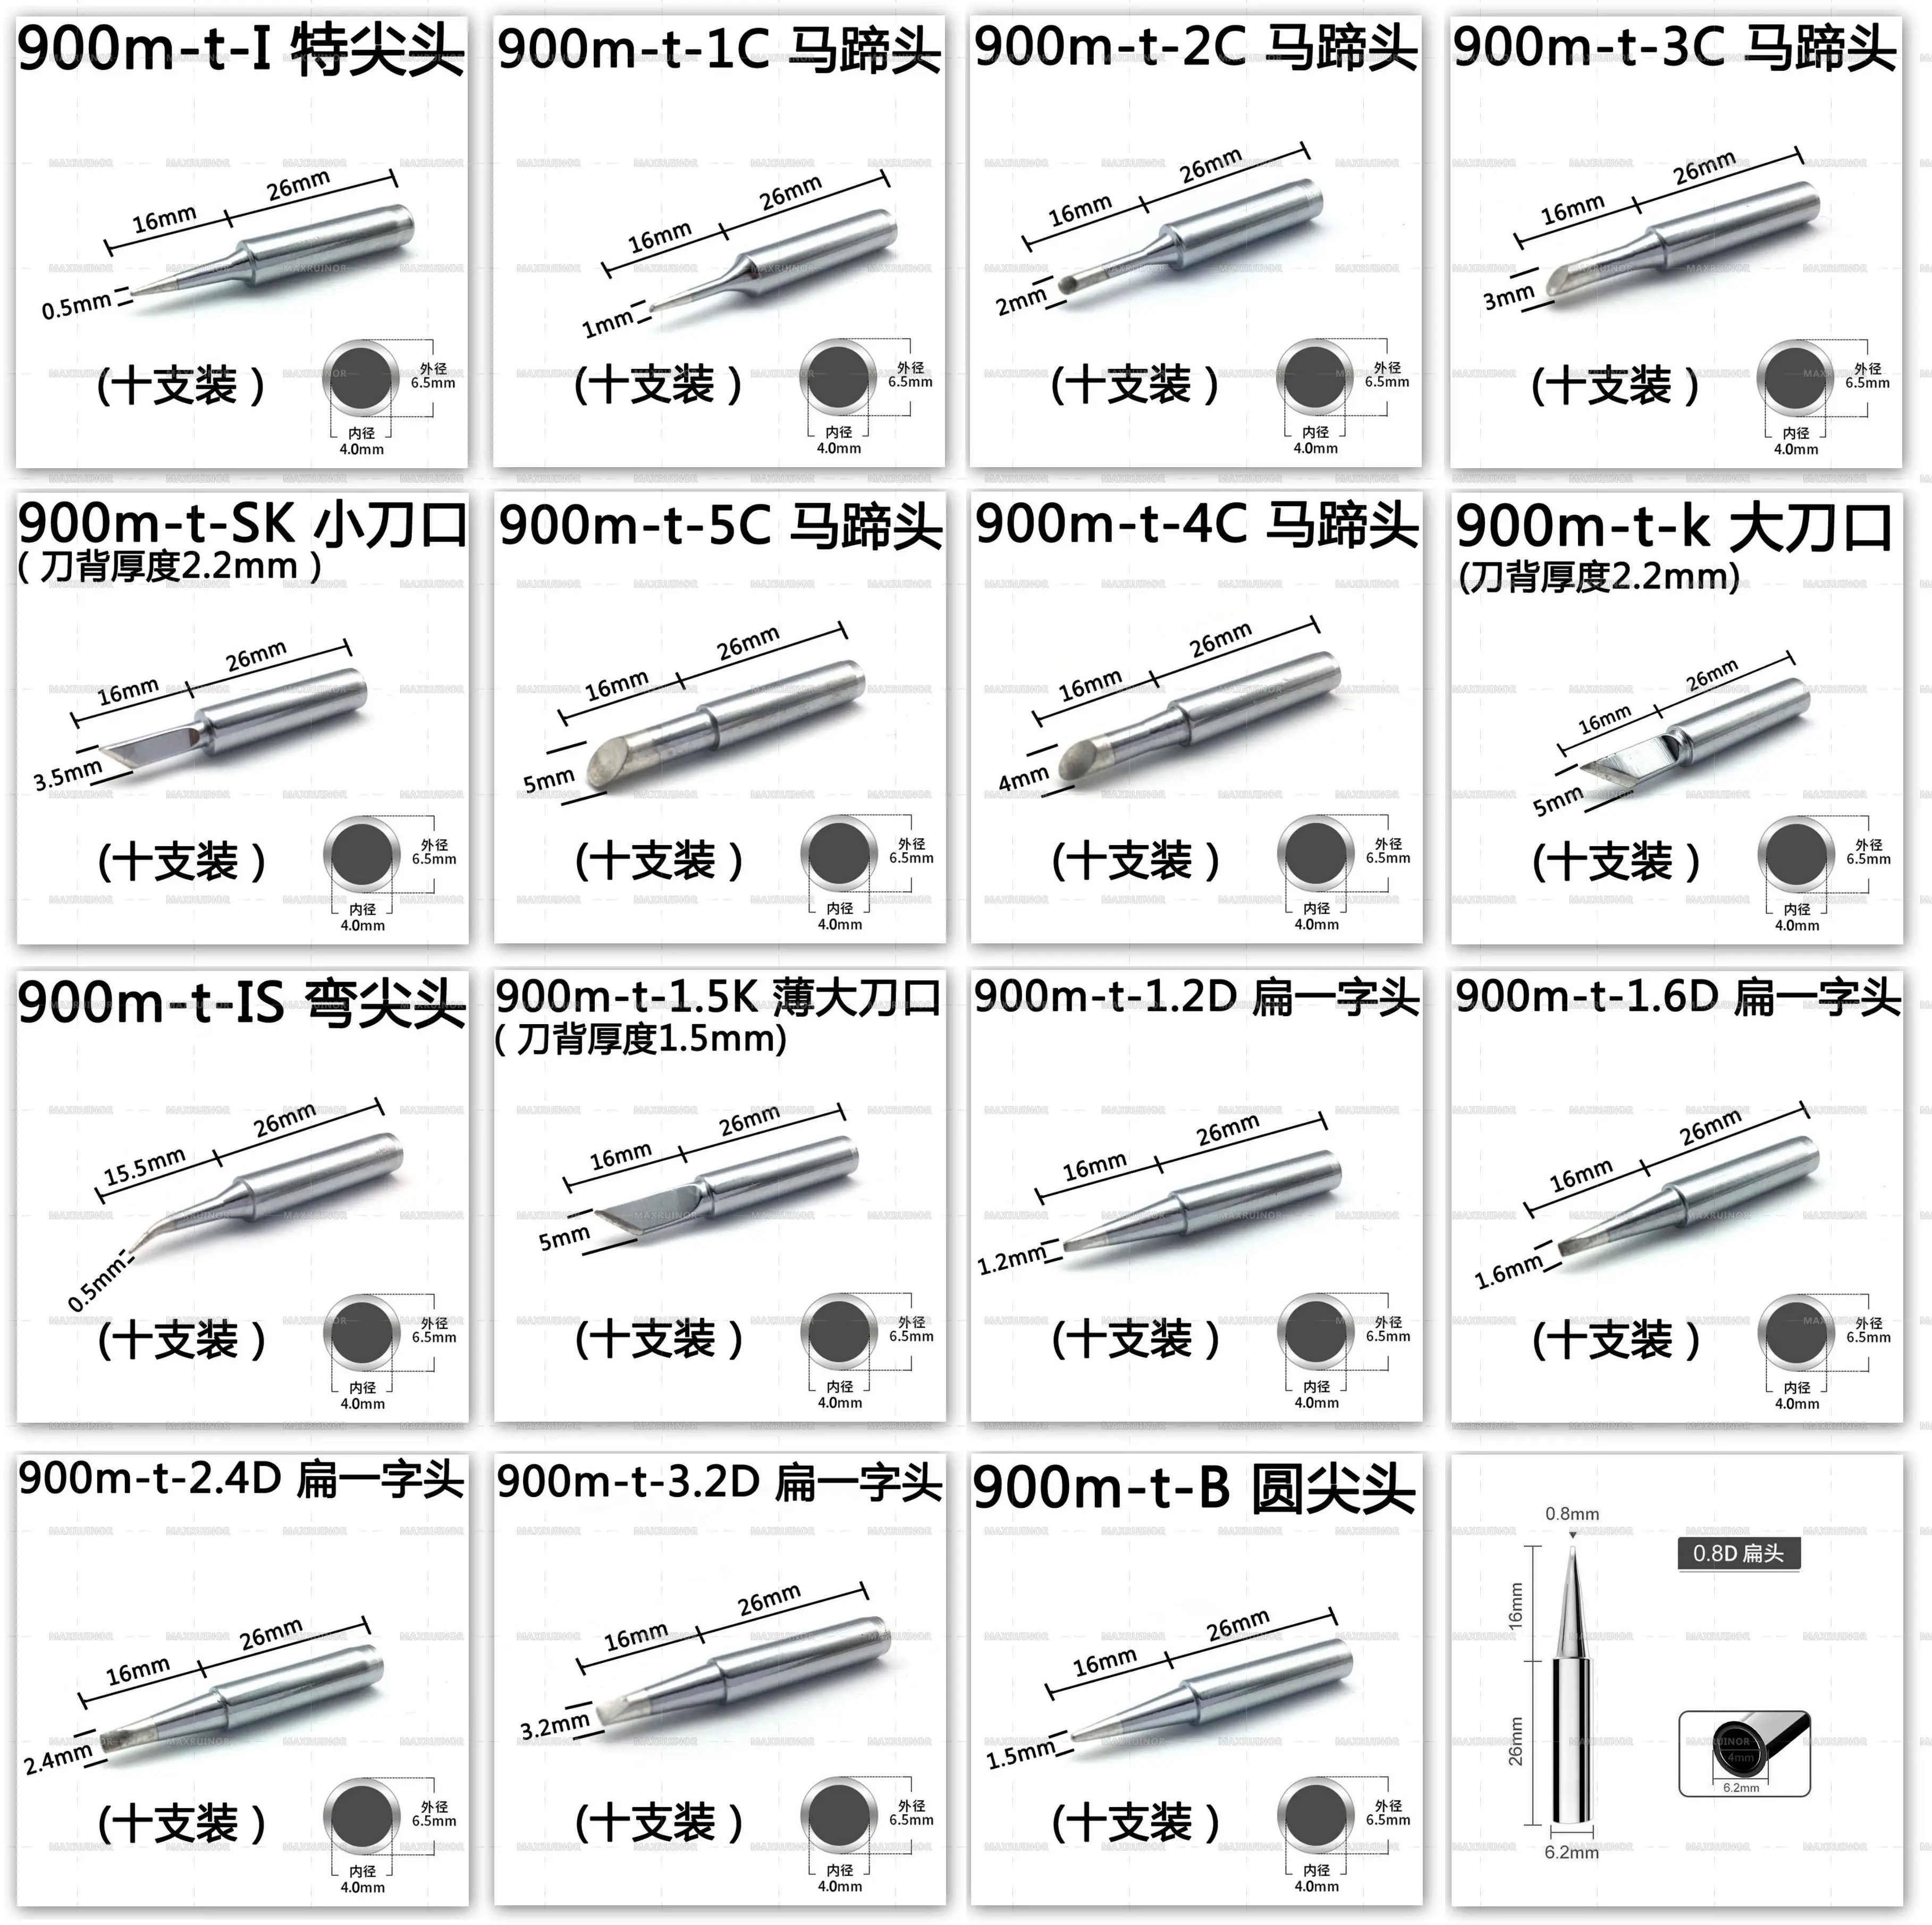 

2 pcs x General Solder Iron Tip 900M Series for Hakko Soldering Rework Station for 936, 937, 938, 969, 8586, 852D Solder Tips